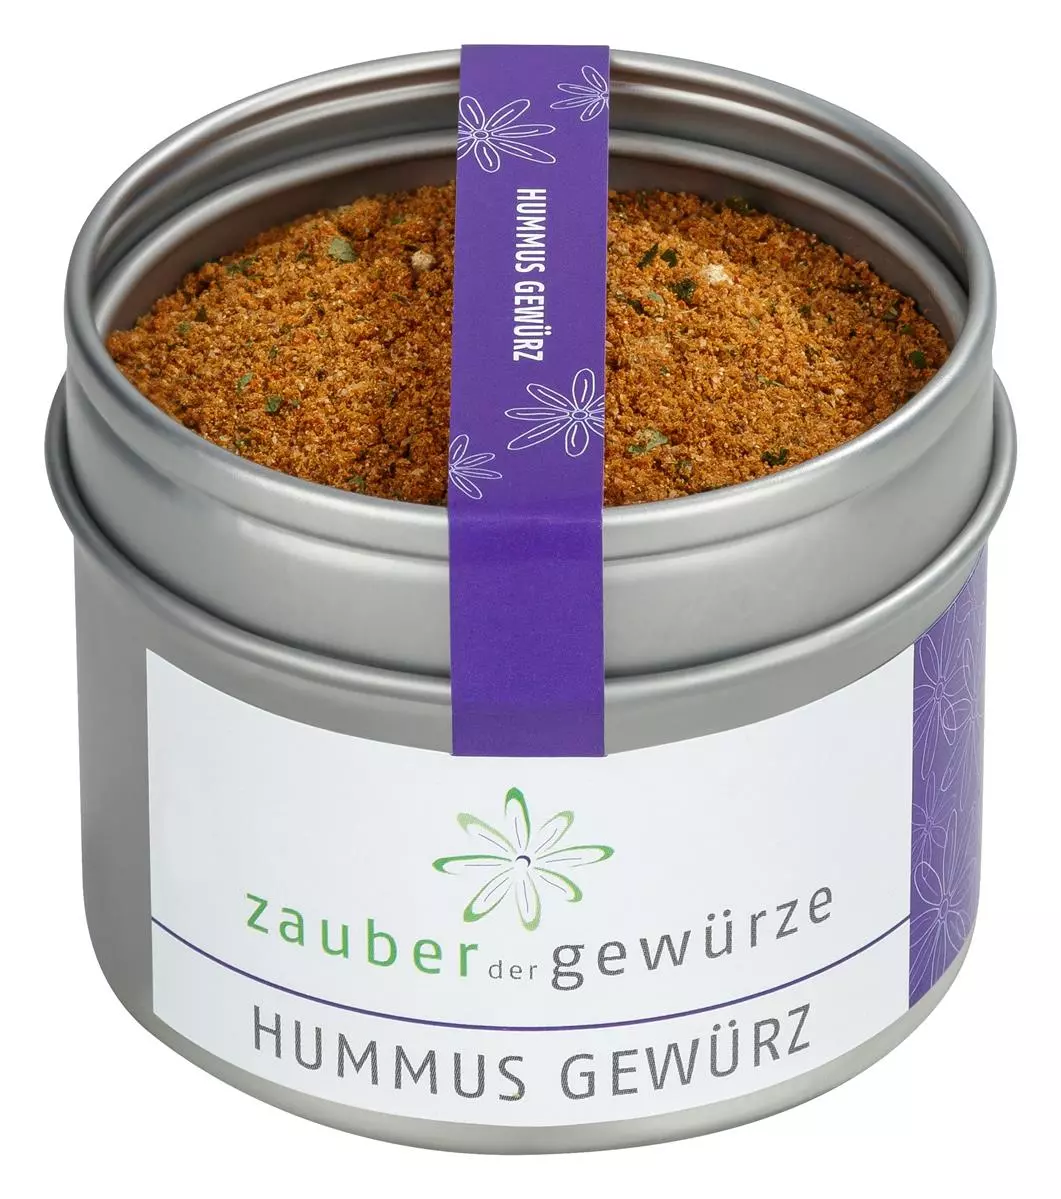 Hummus Gewürz-old-var